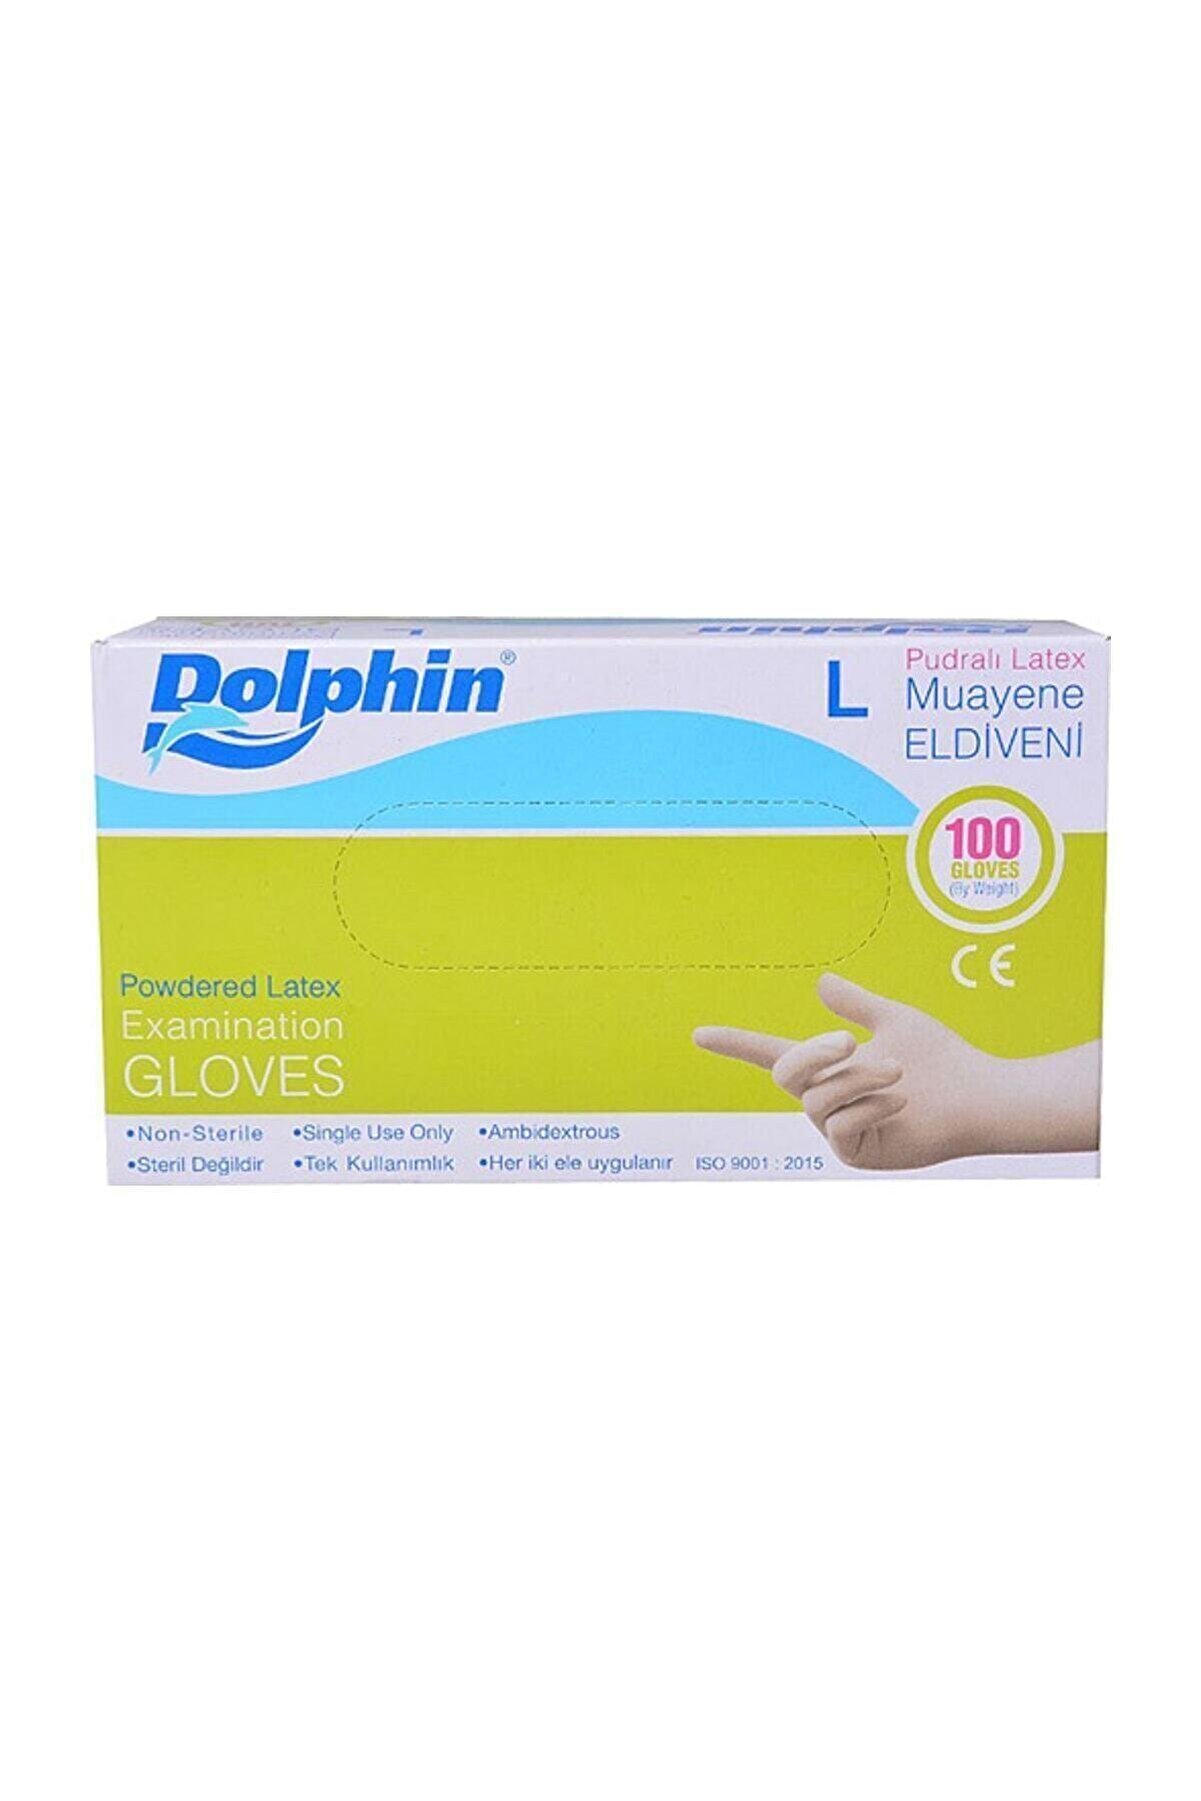 Dolphin Cerrahi Eldiven Pudralı Latex L 100 Lü